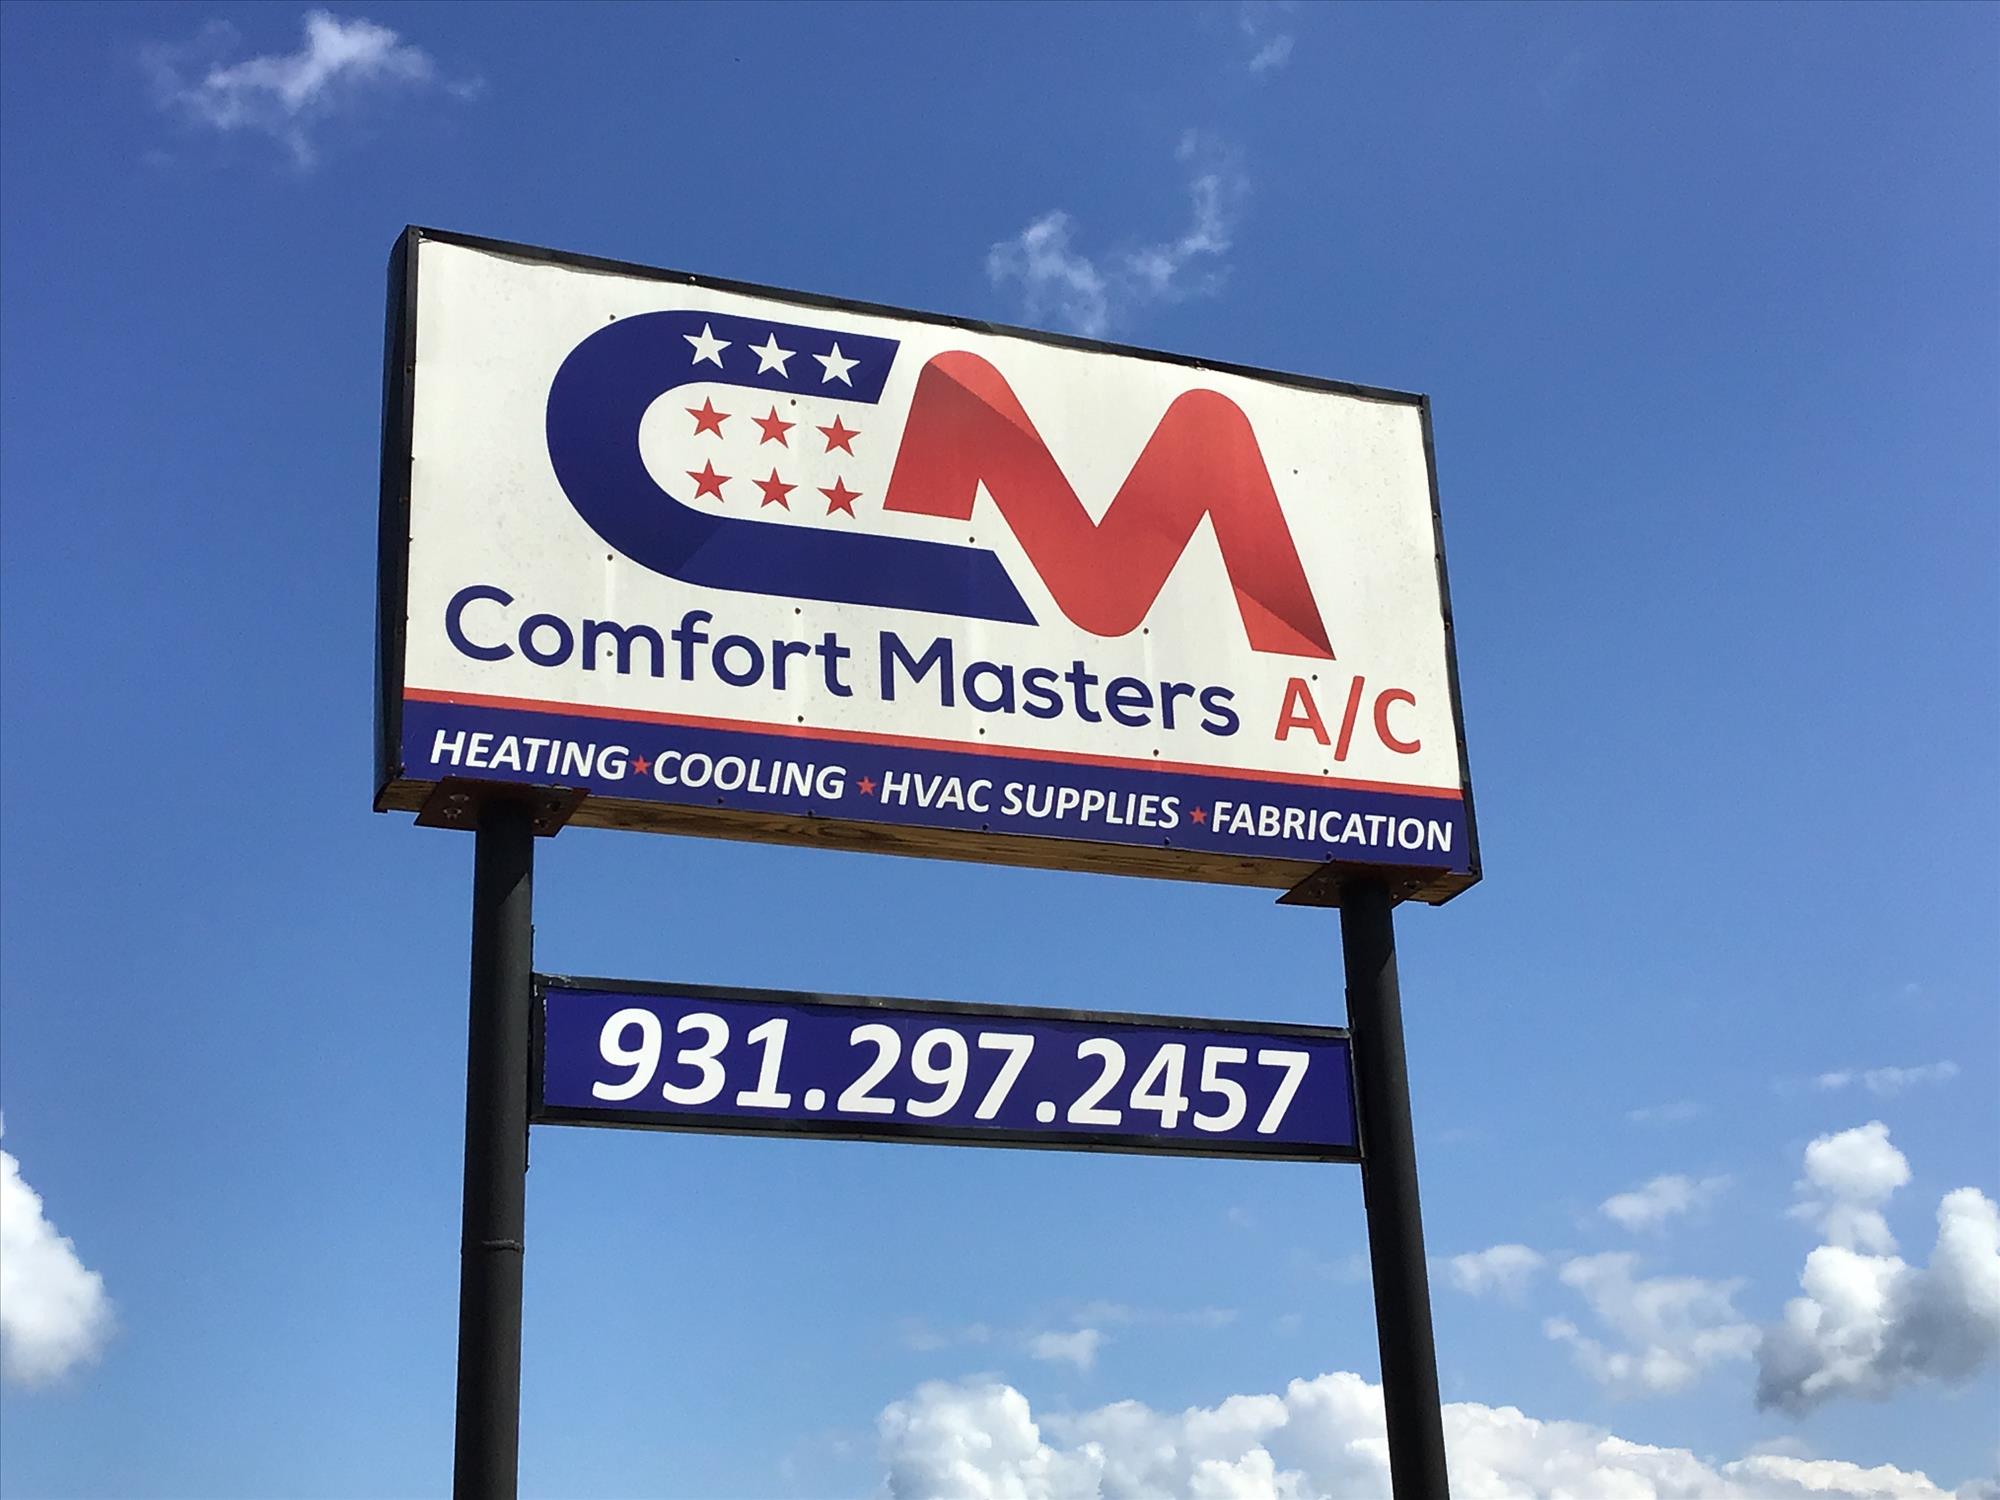 Comfort Masters A/C